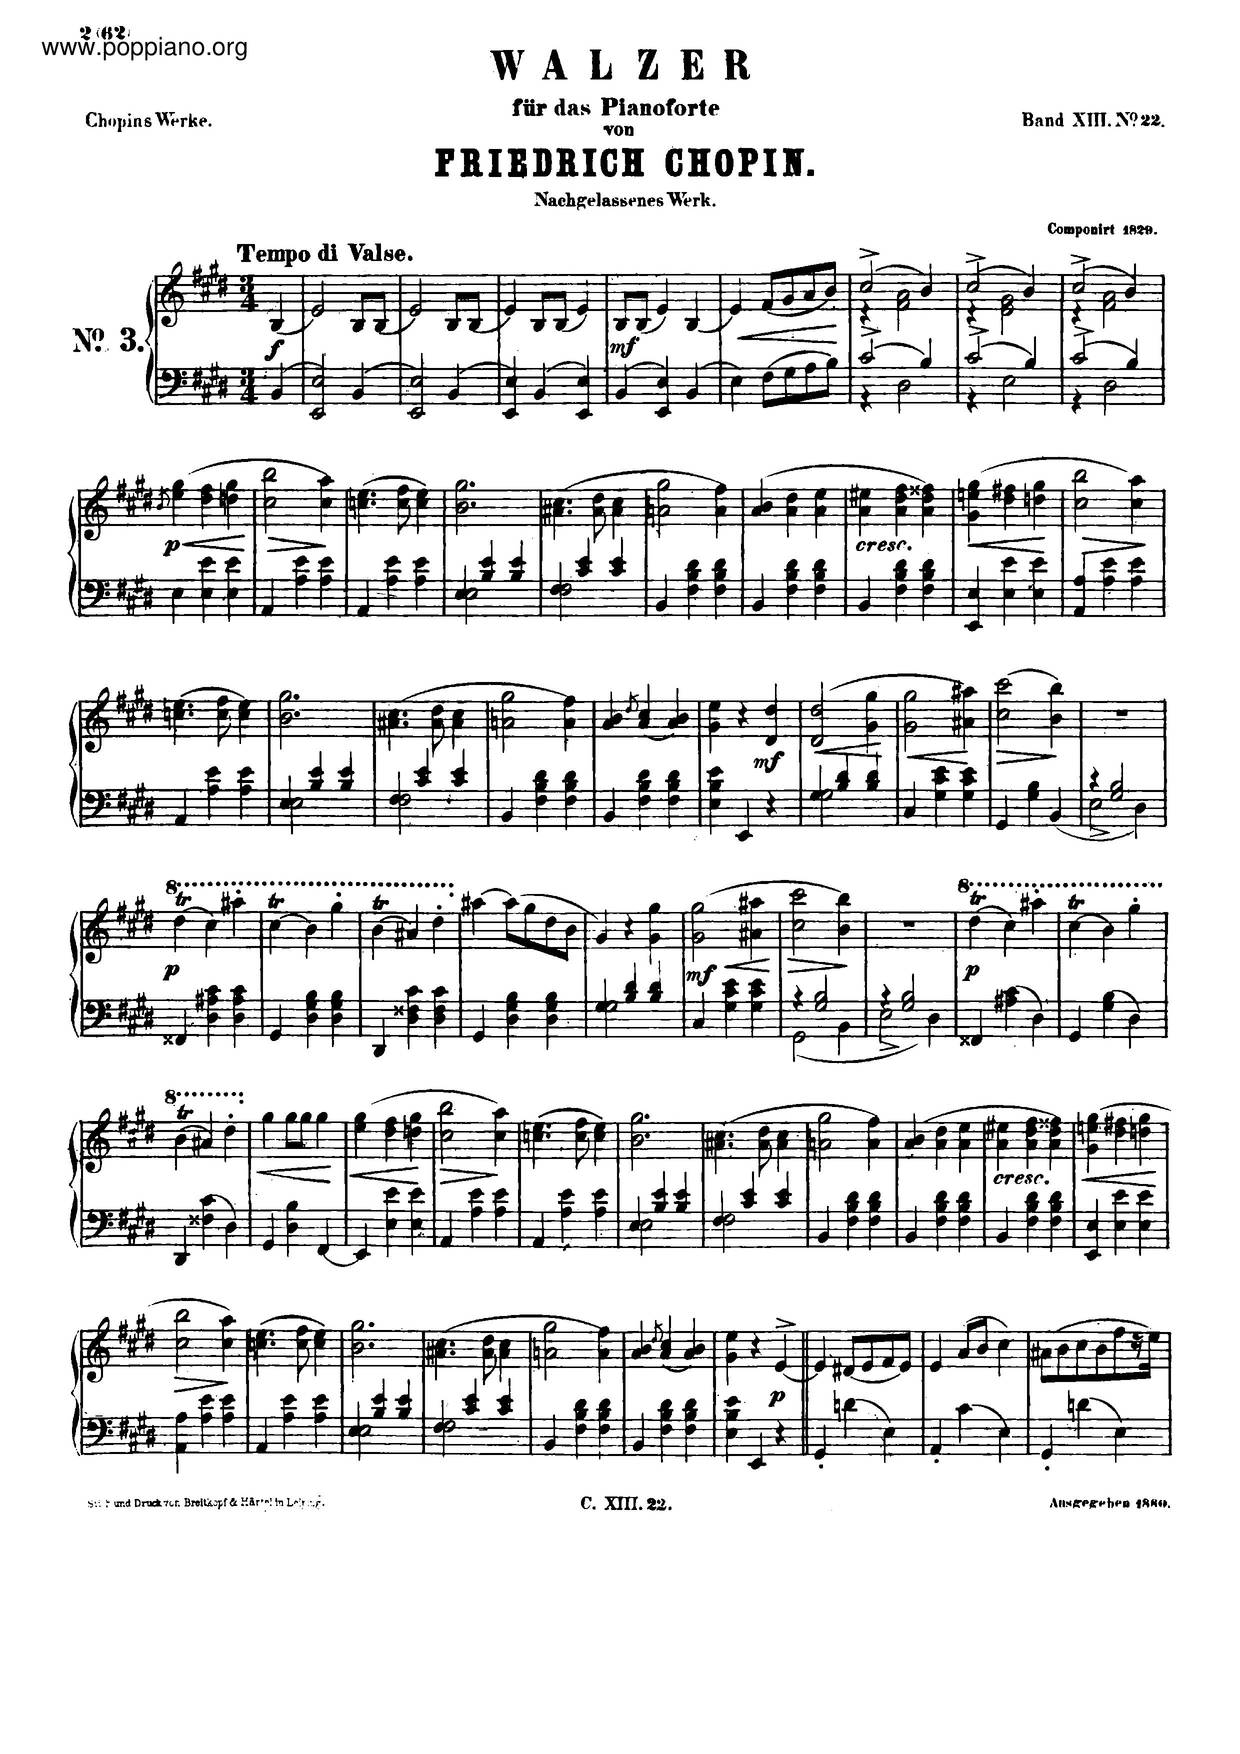 Waltz In E Major, B. 44琴譜